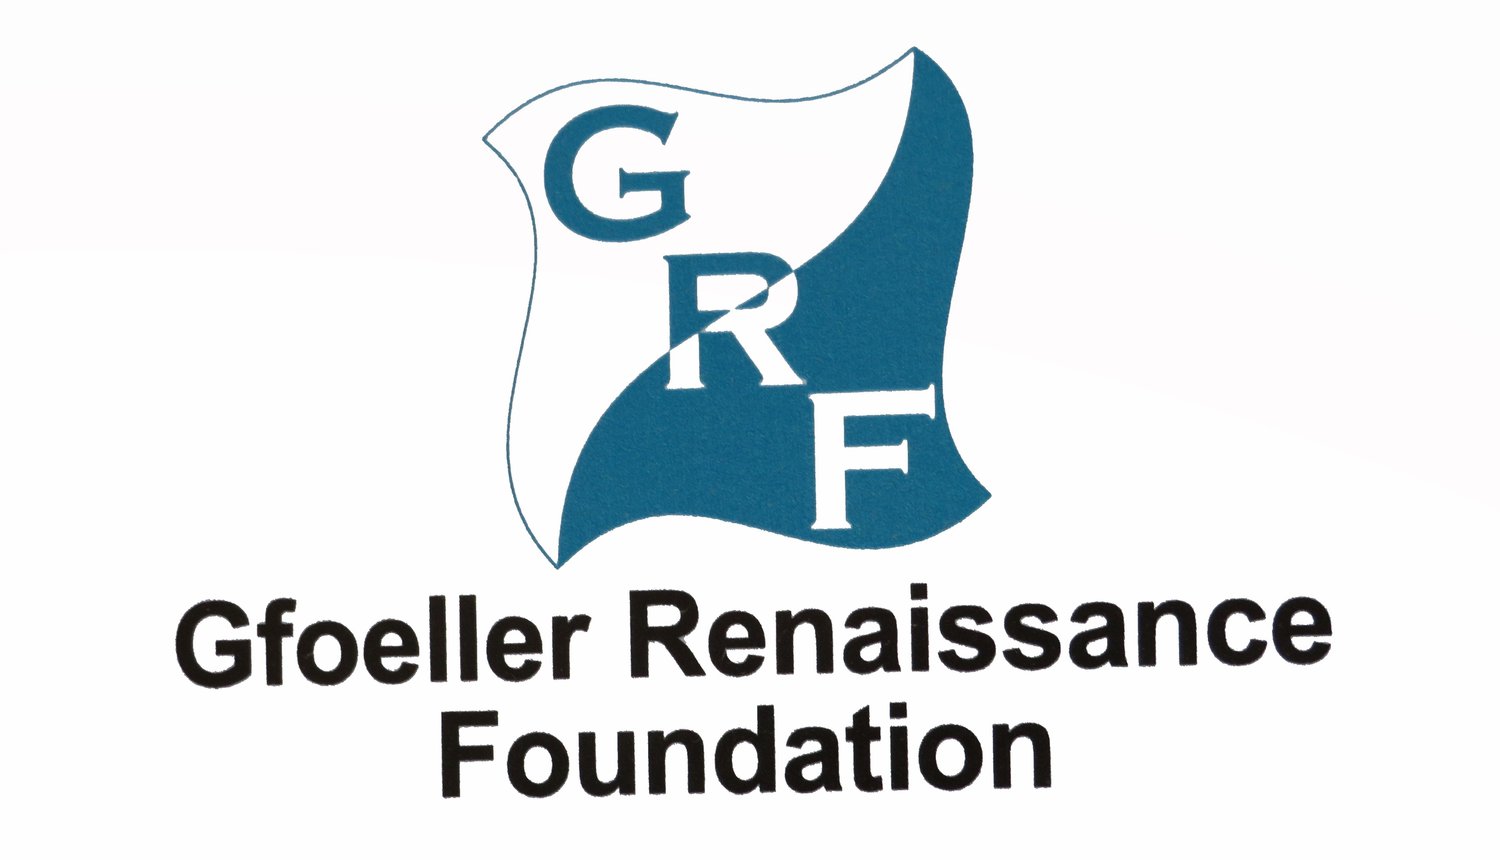 Gfoeller Renaissance Foundation